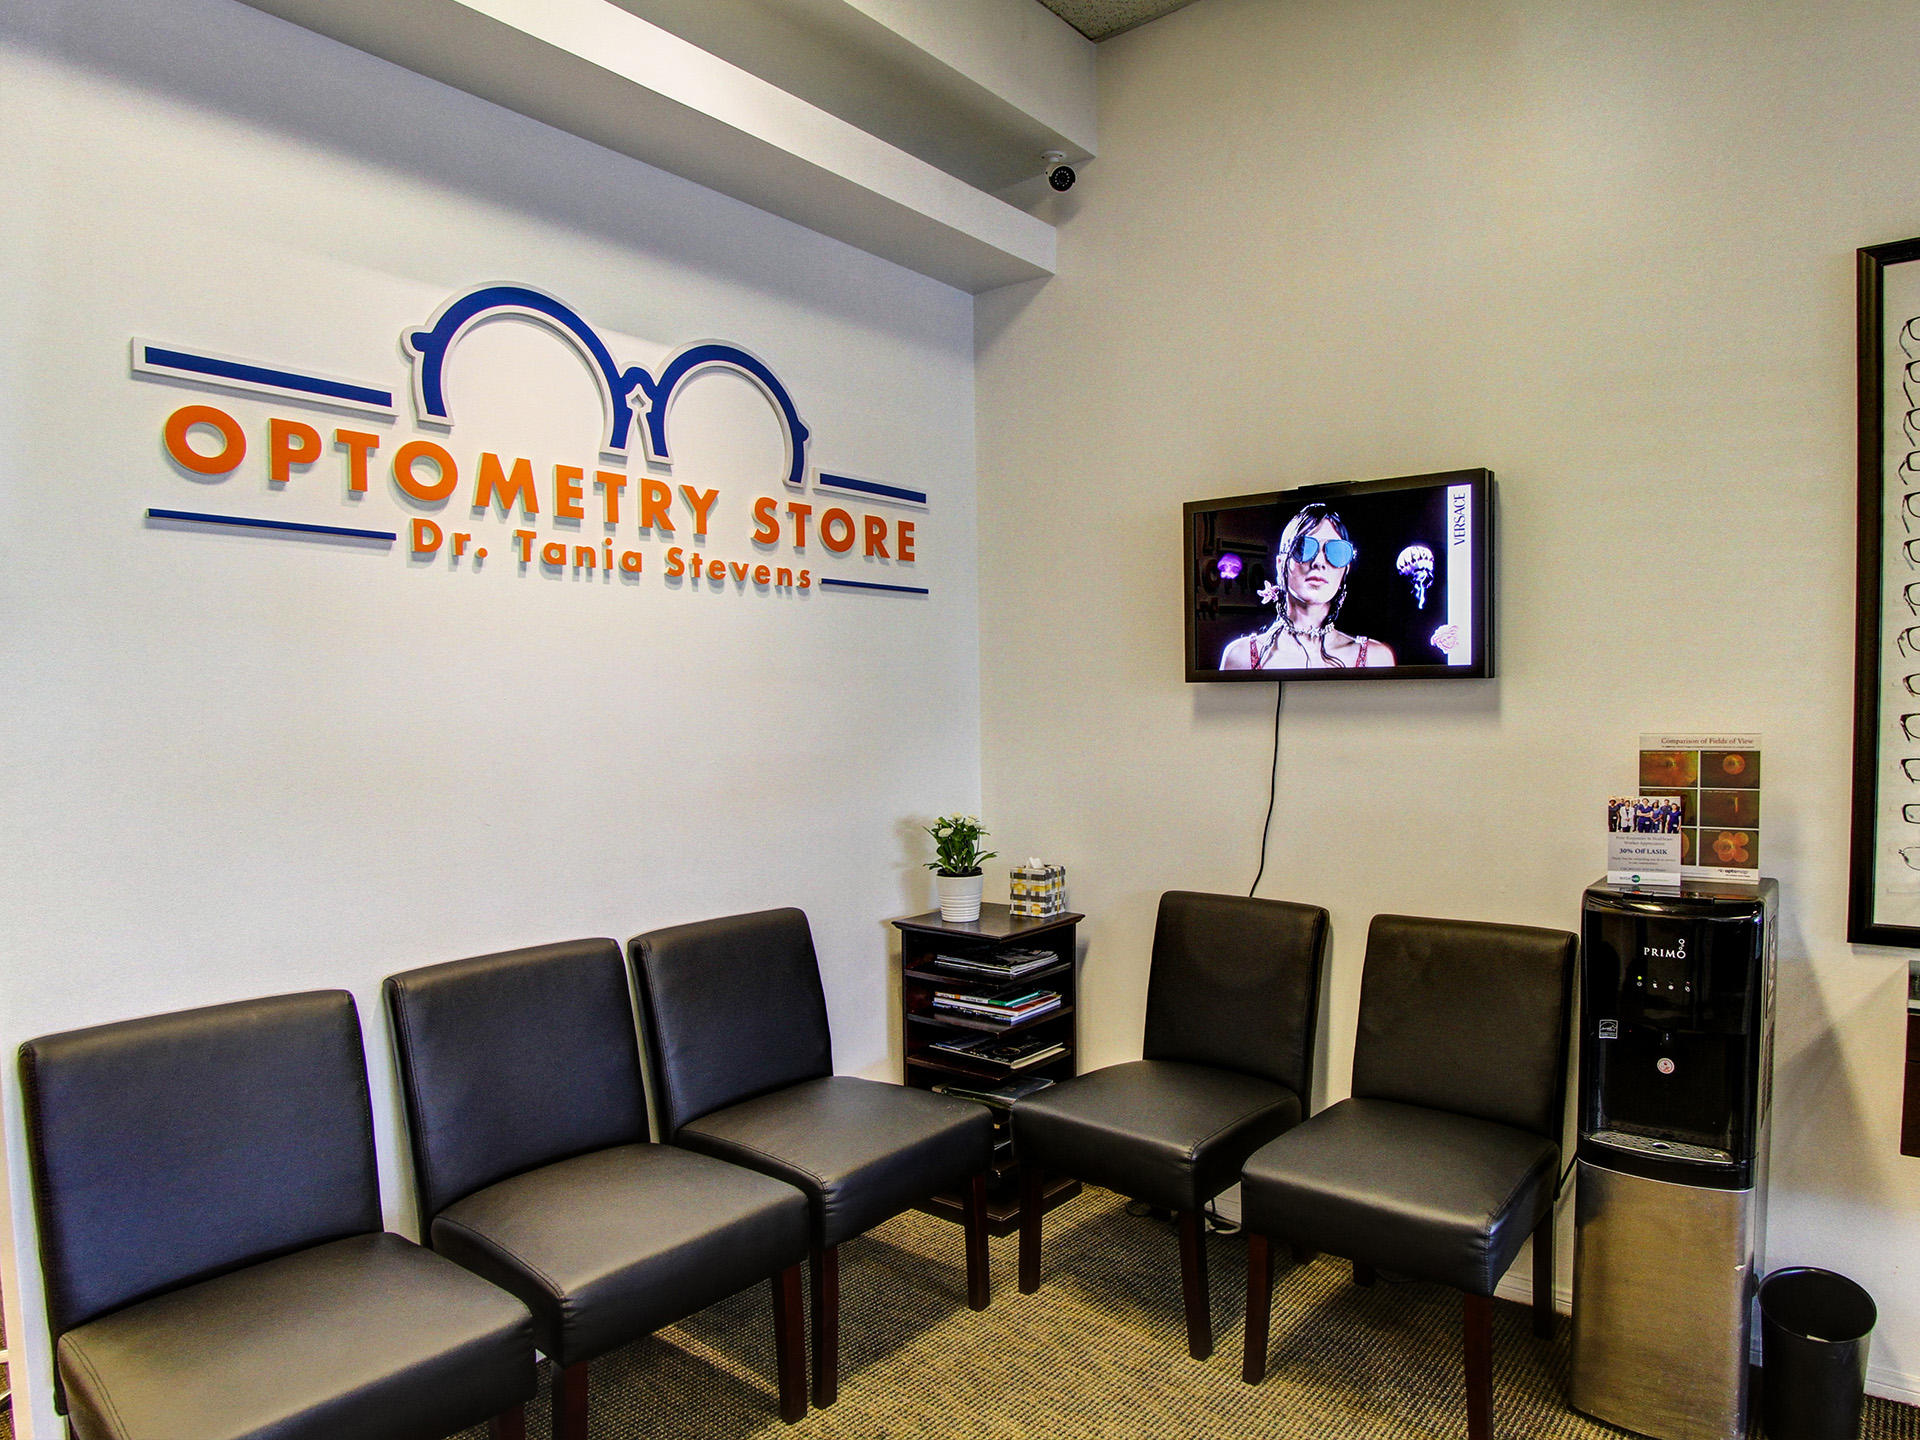 Optometry Store  Dr. Tania Stevens | Eye Exams, Emergency Walkin and Optical Lenses